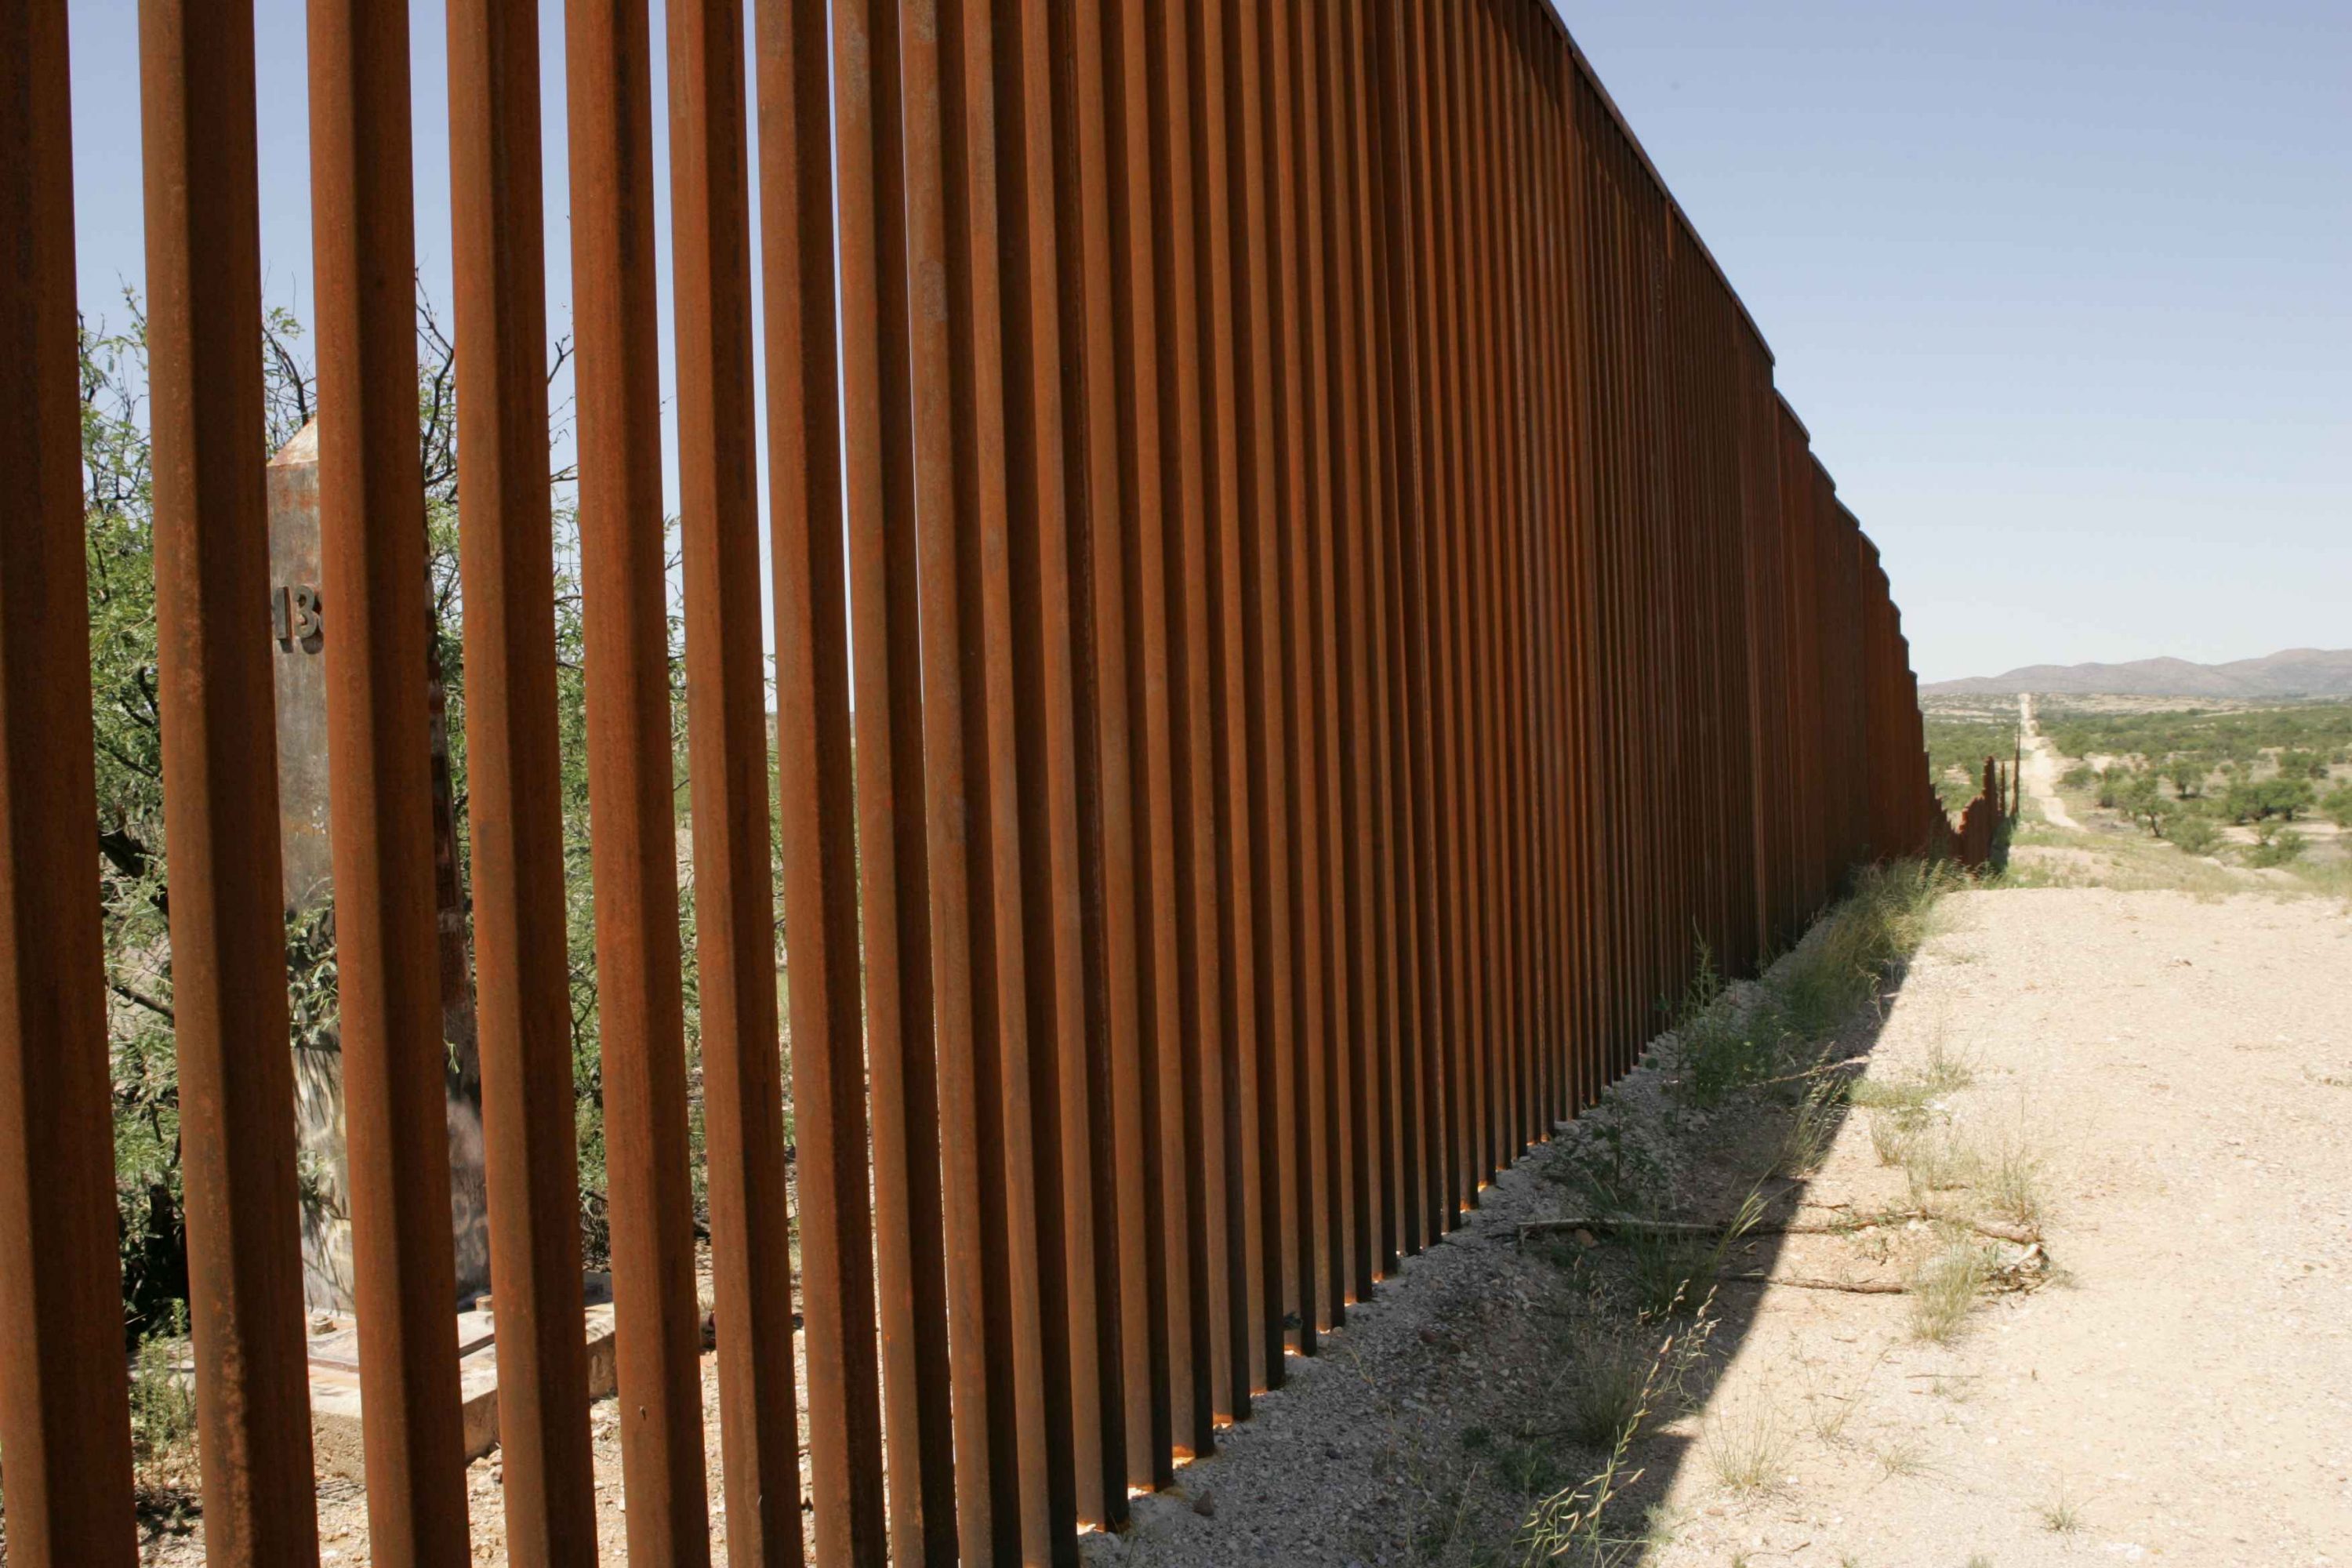 Muro na fronteira sul entre EUA-México (foto: flickr)